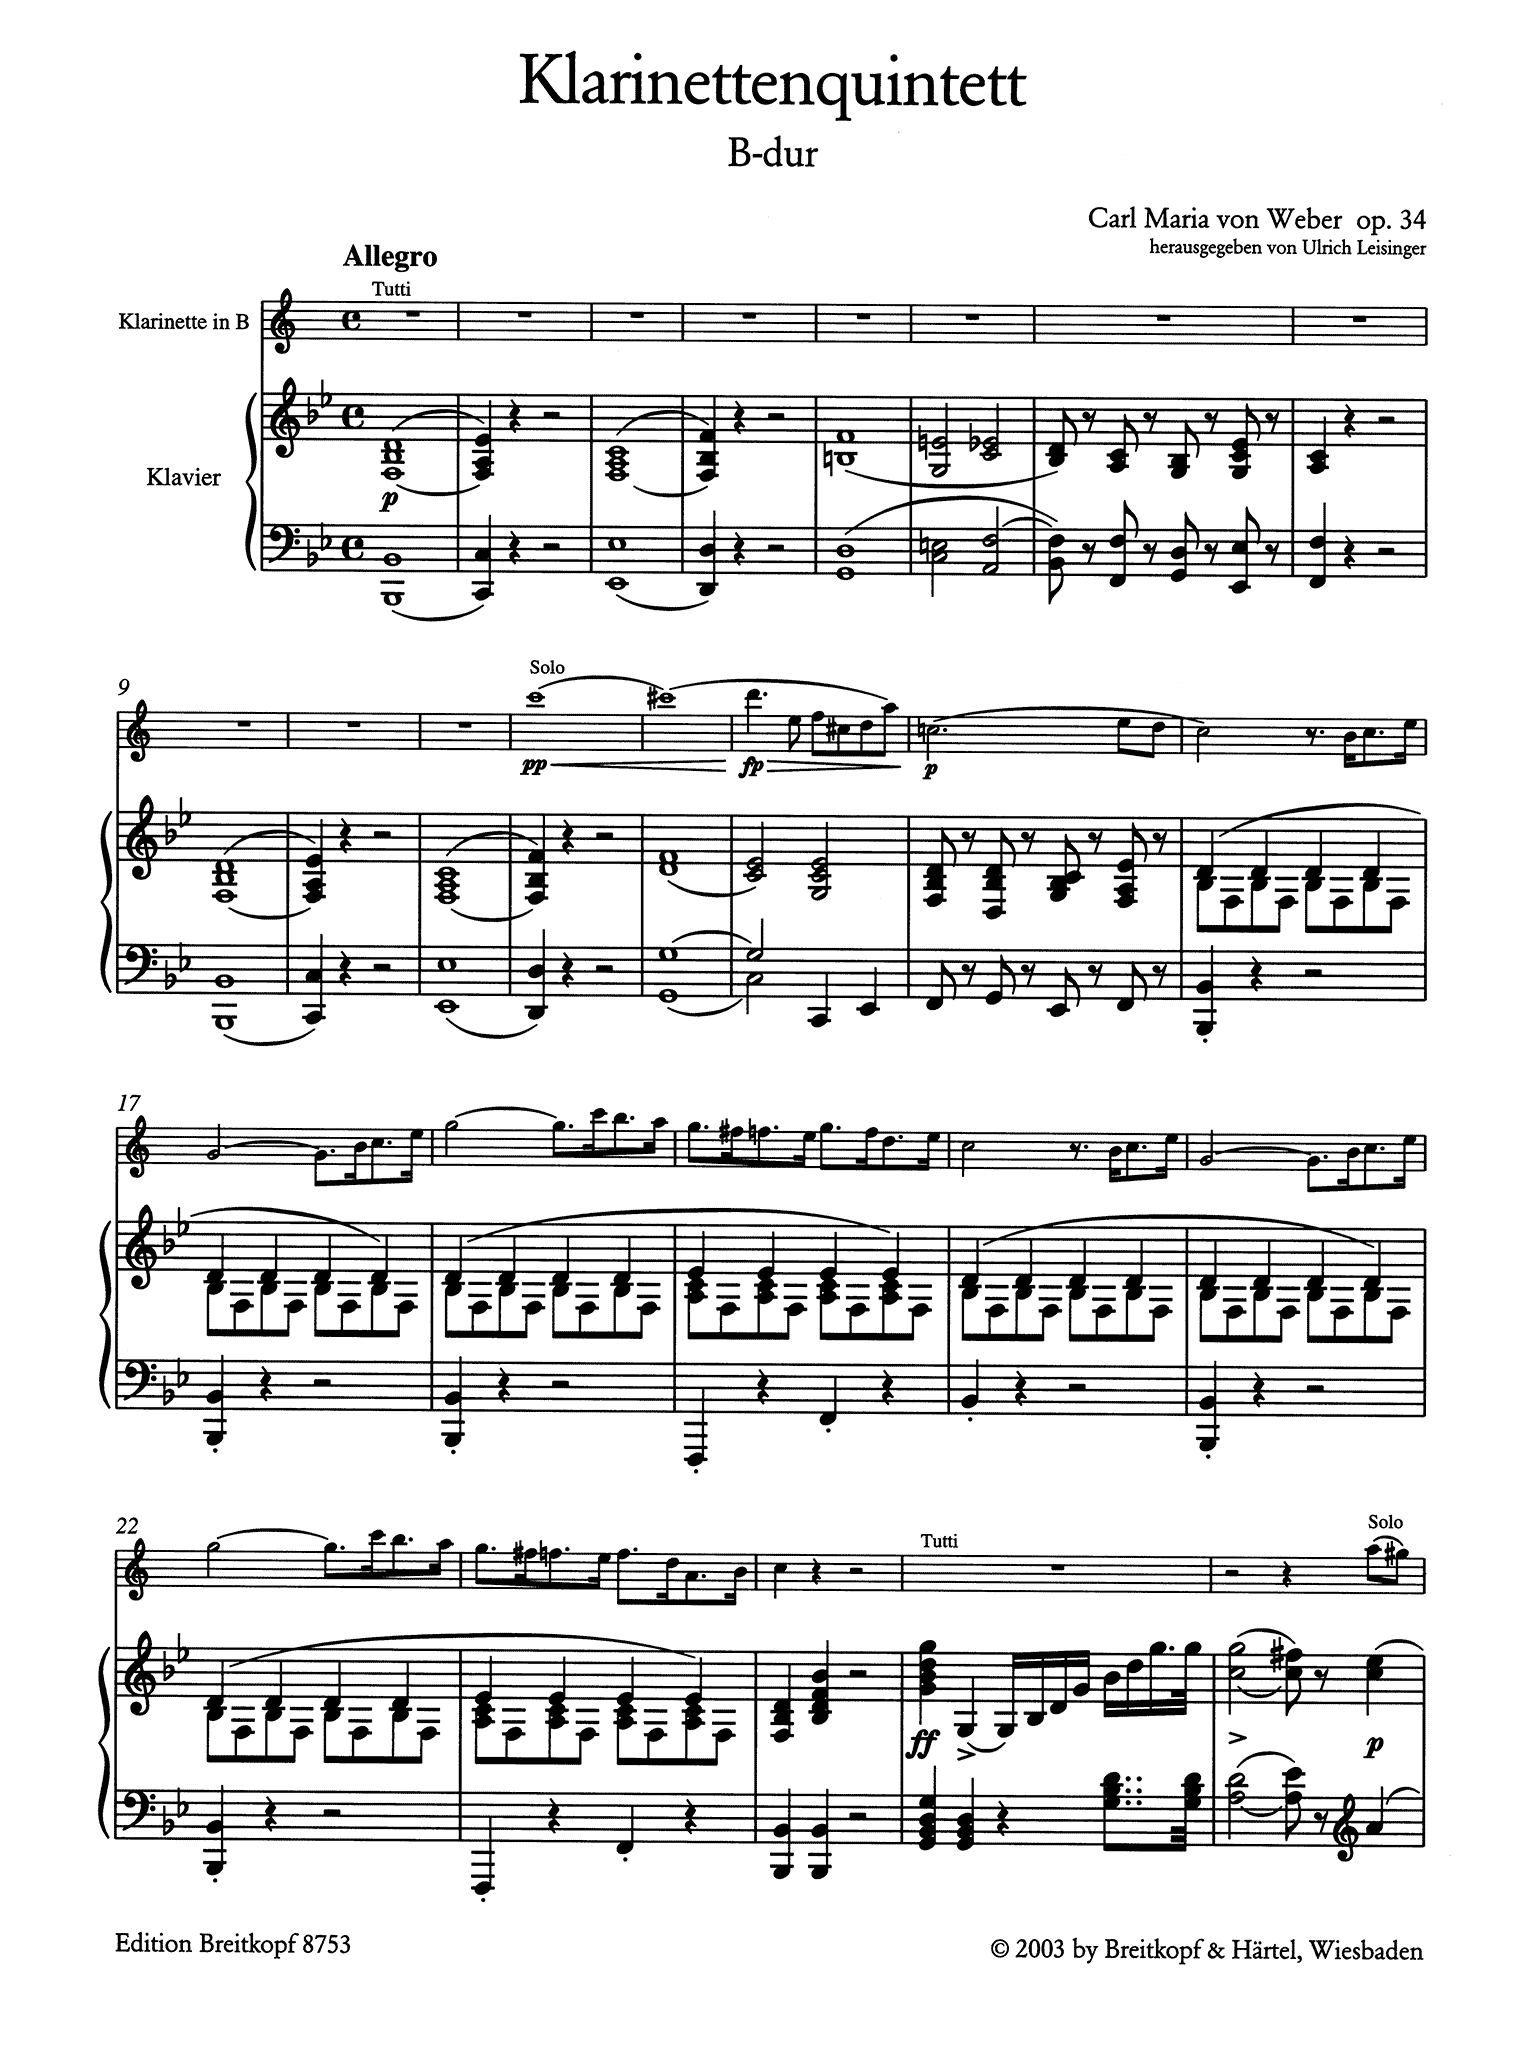 Clarinet Quintet, Op. 34 Piano reduction - Movement 1